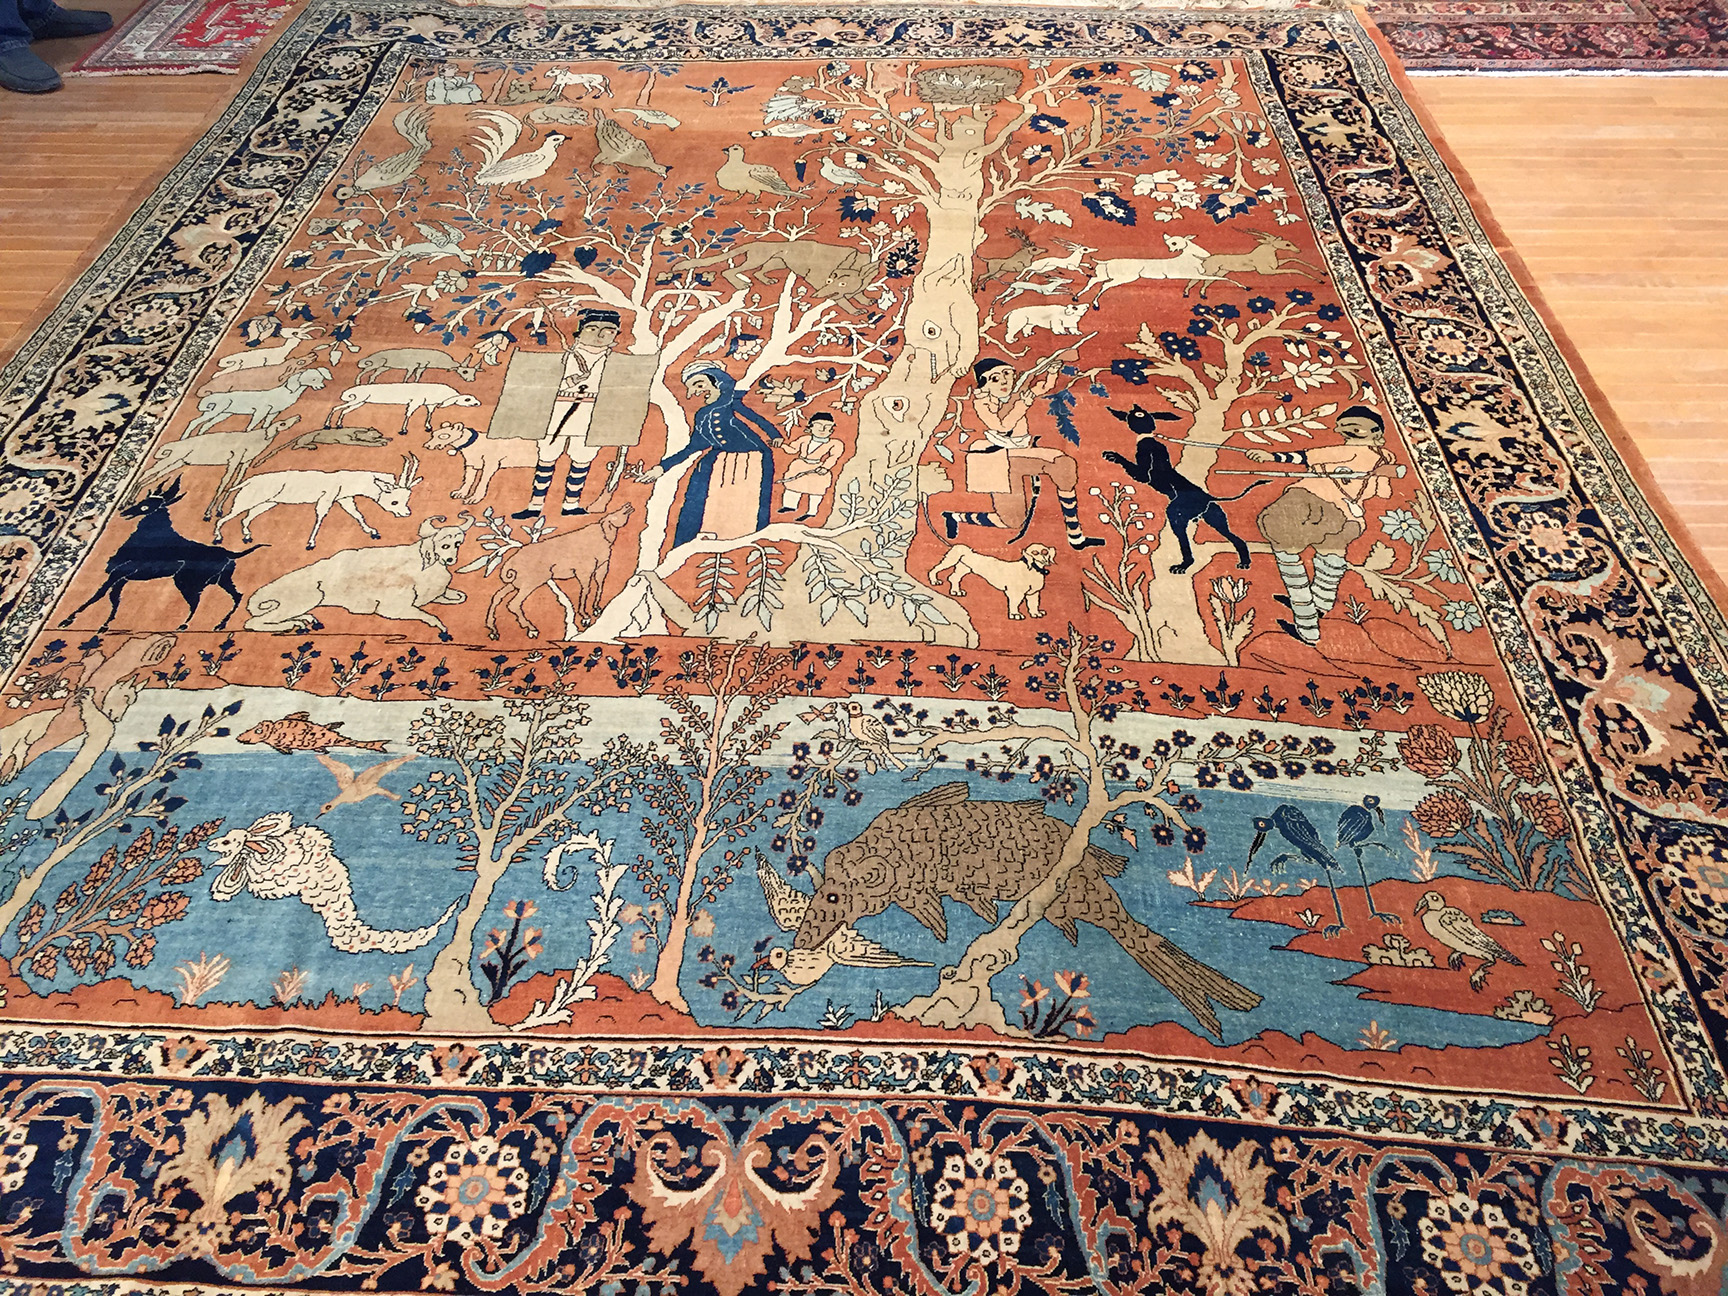 Antique tabriz Carpet - # 54178